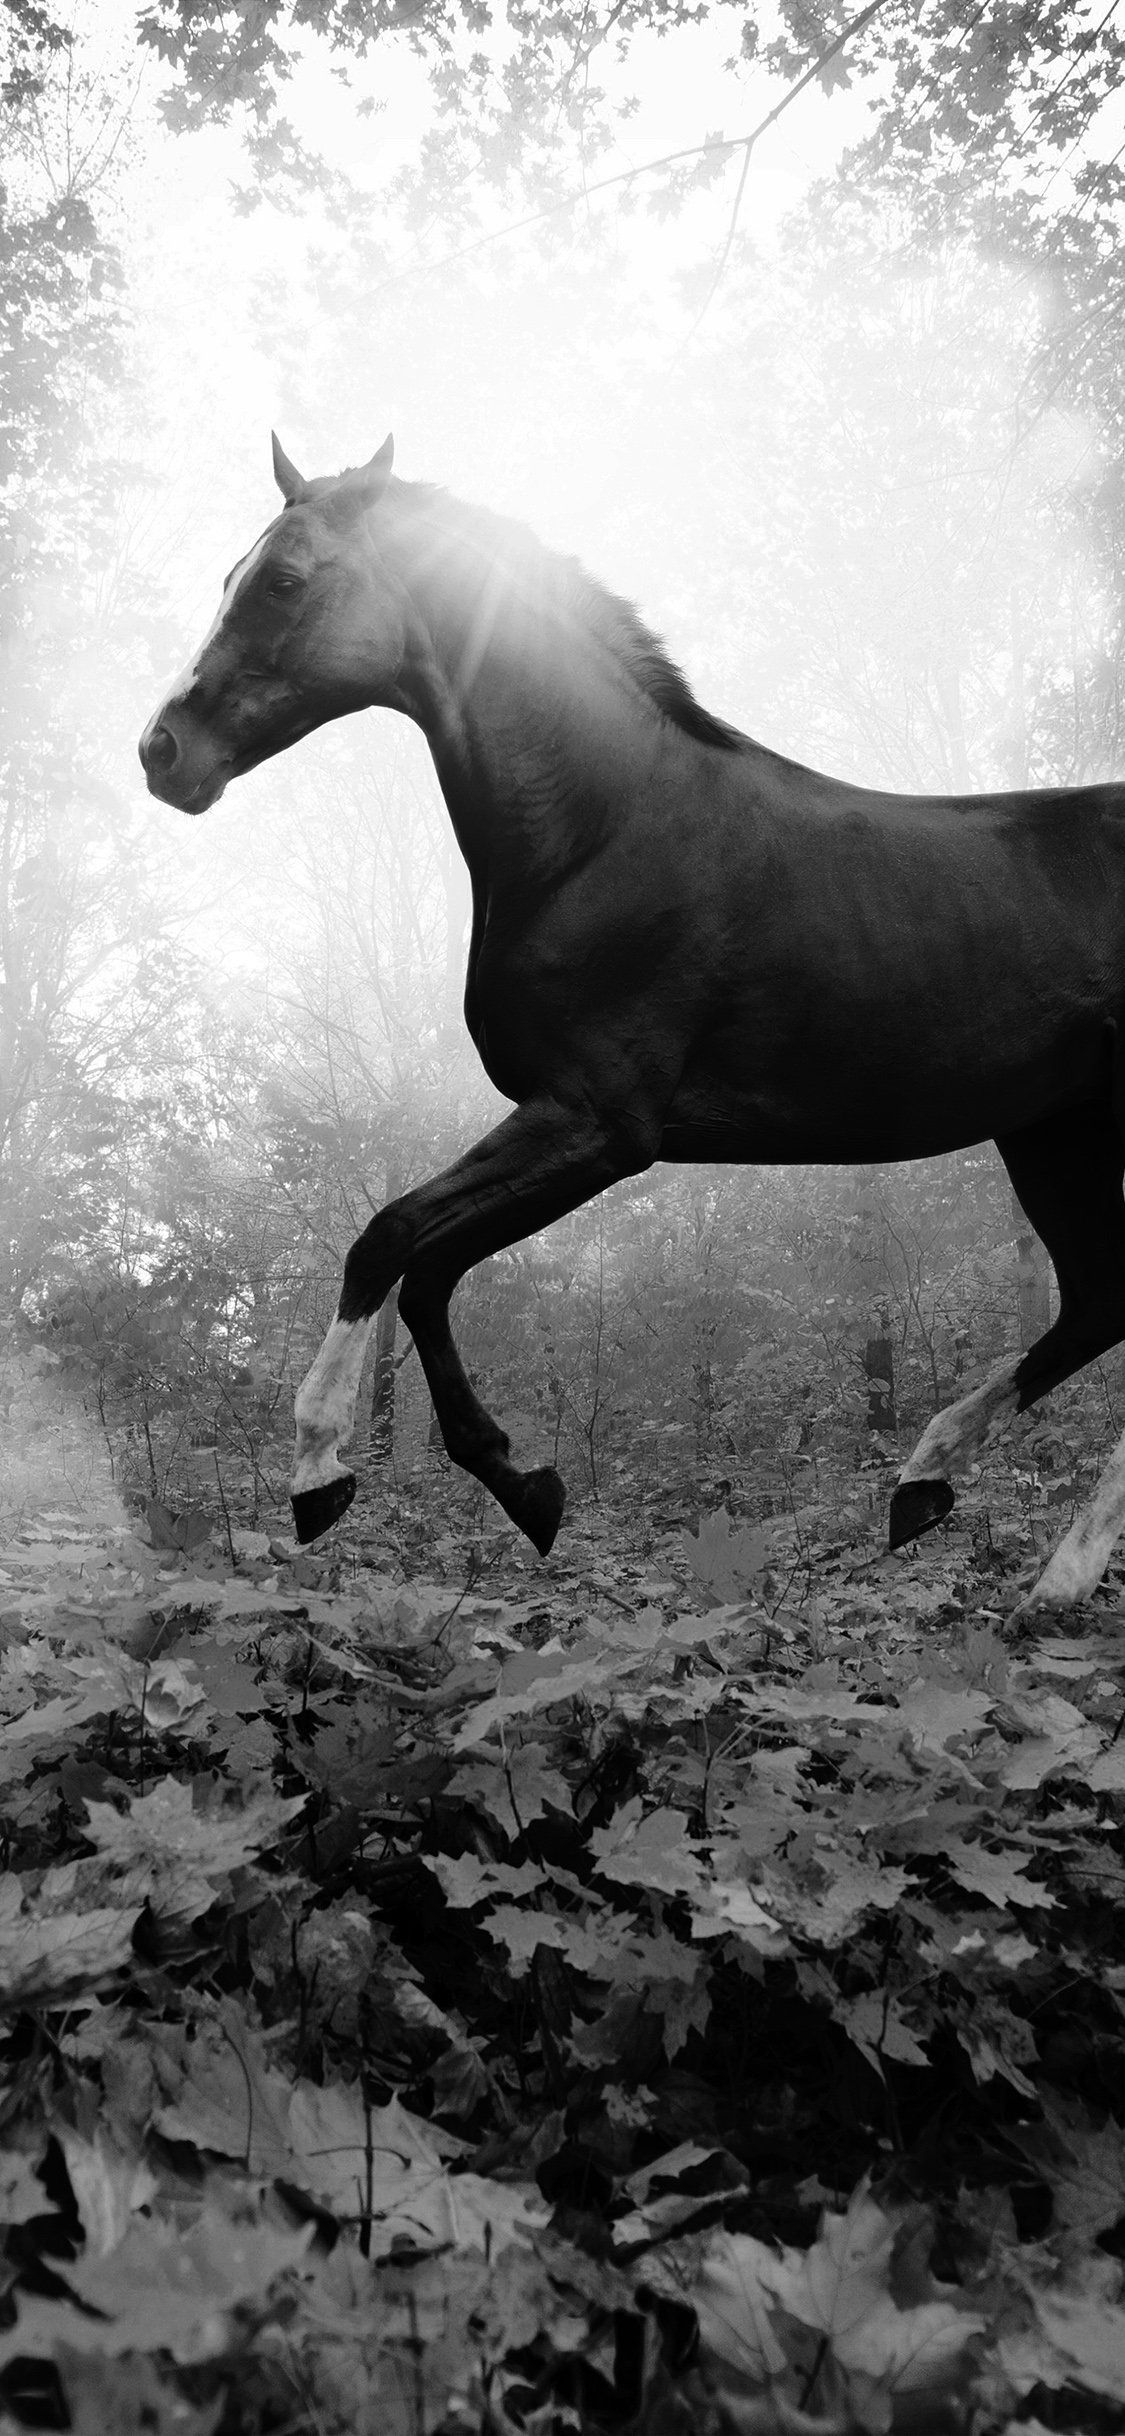 Beautiful Horse Iphone Wallpapers